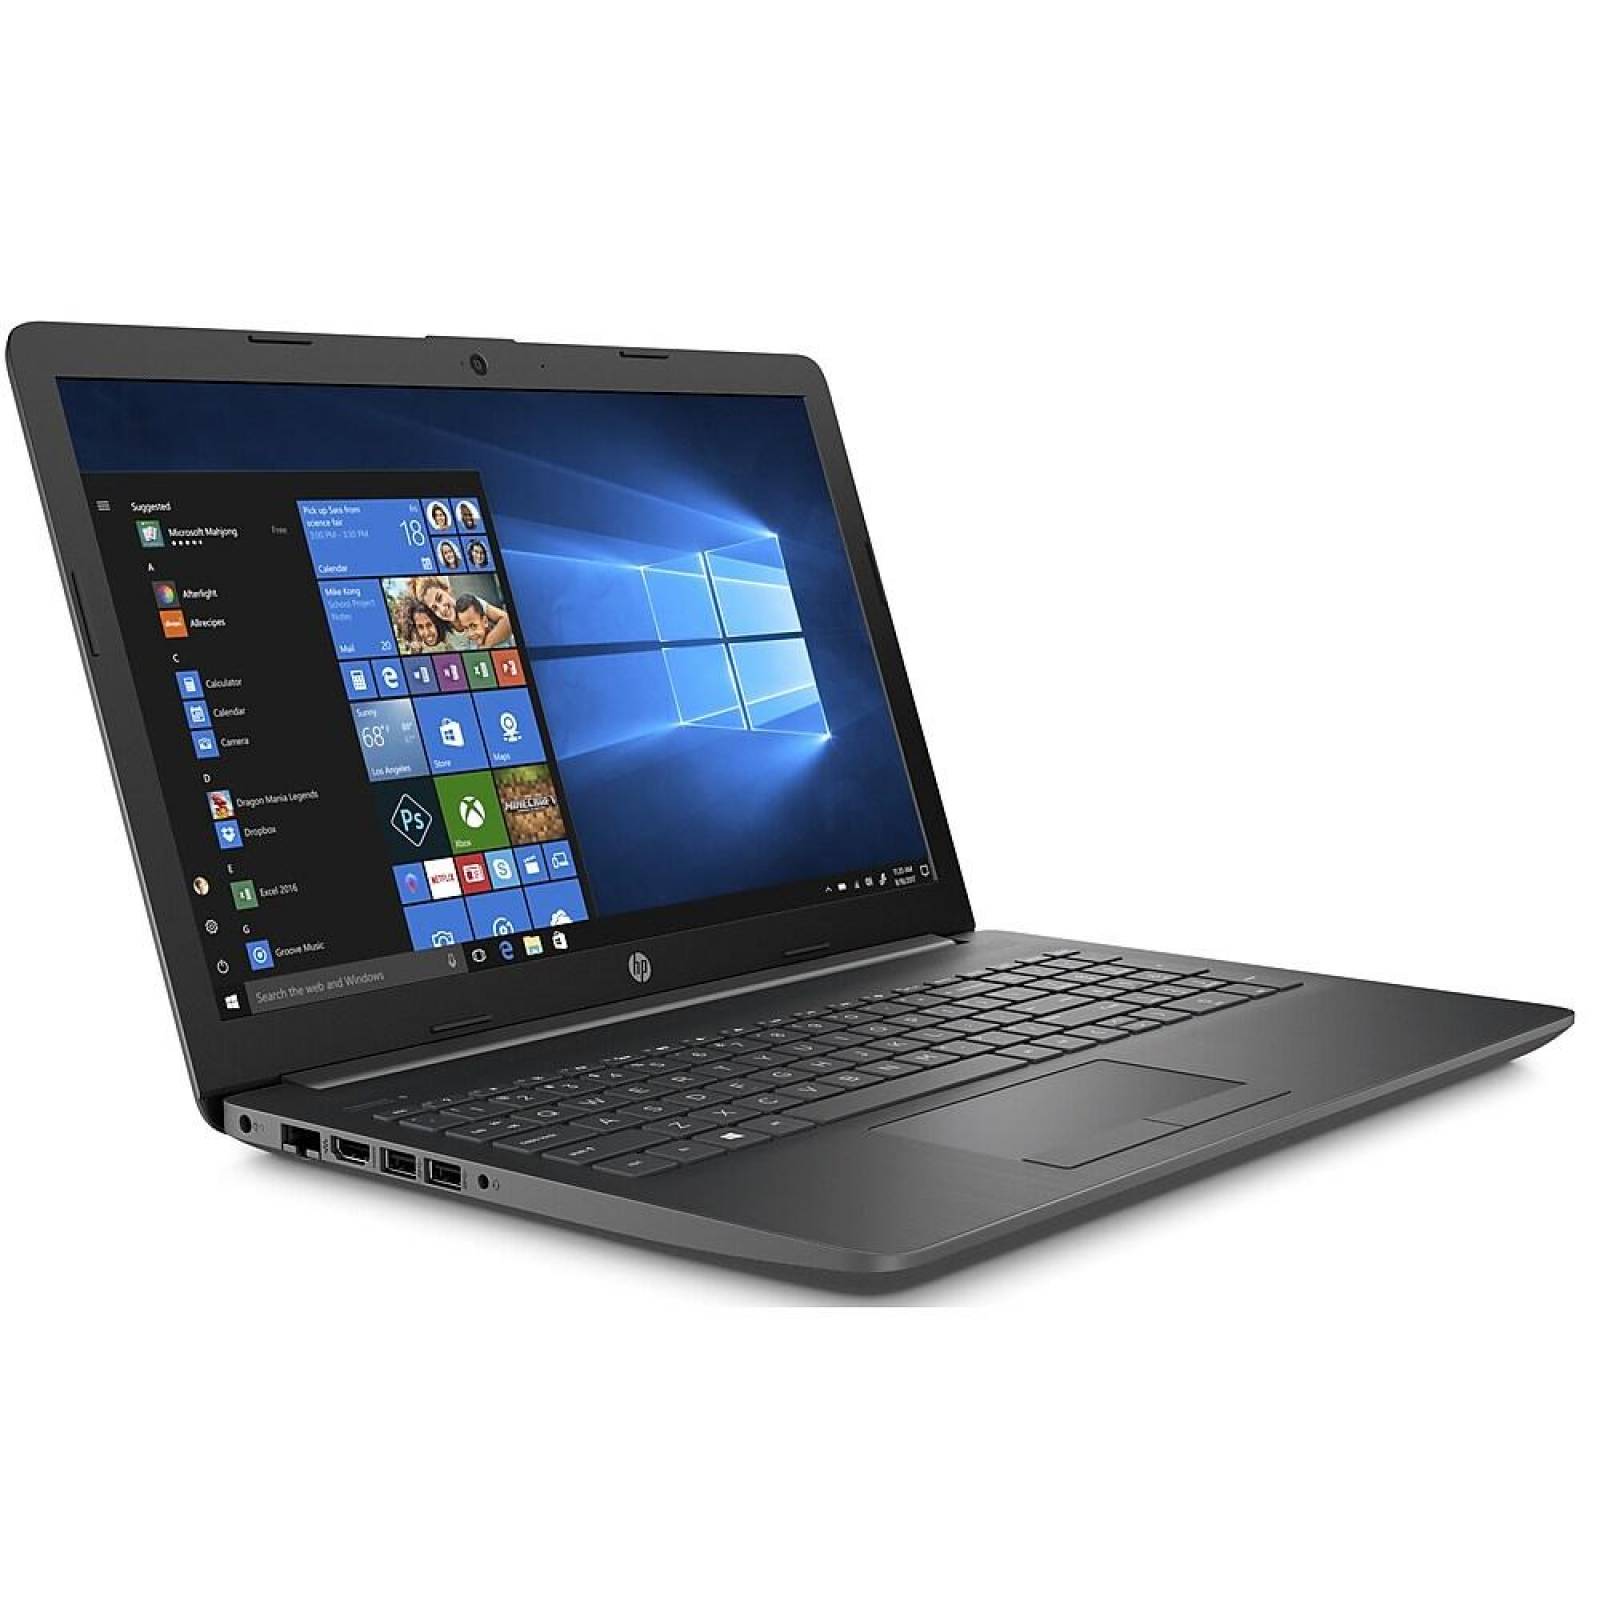 Laptop HP AMD Ryzen 5 3500U 1TB 8GB Touch DVD-RW 15-DB1040 - Reacondicionado